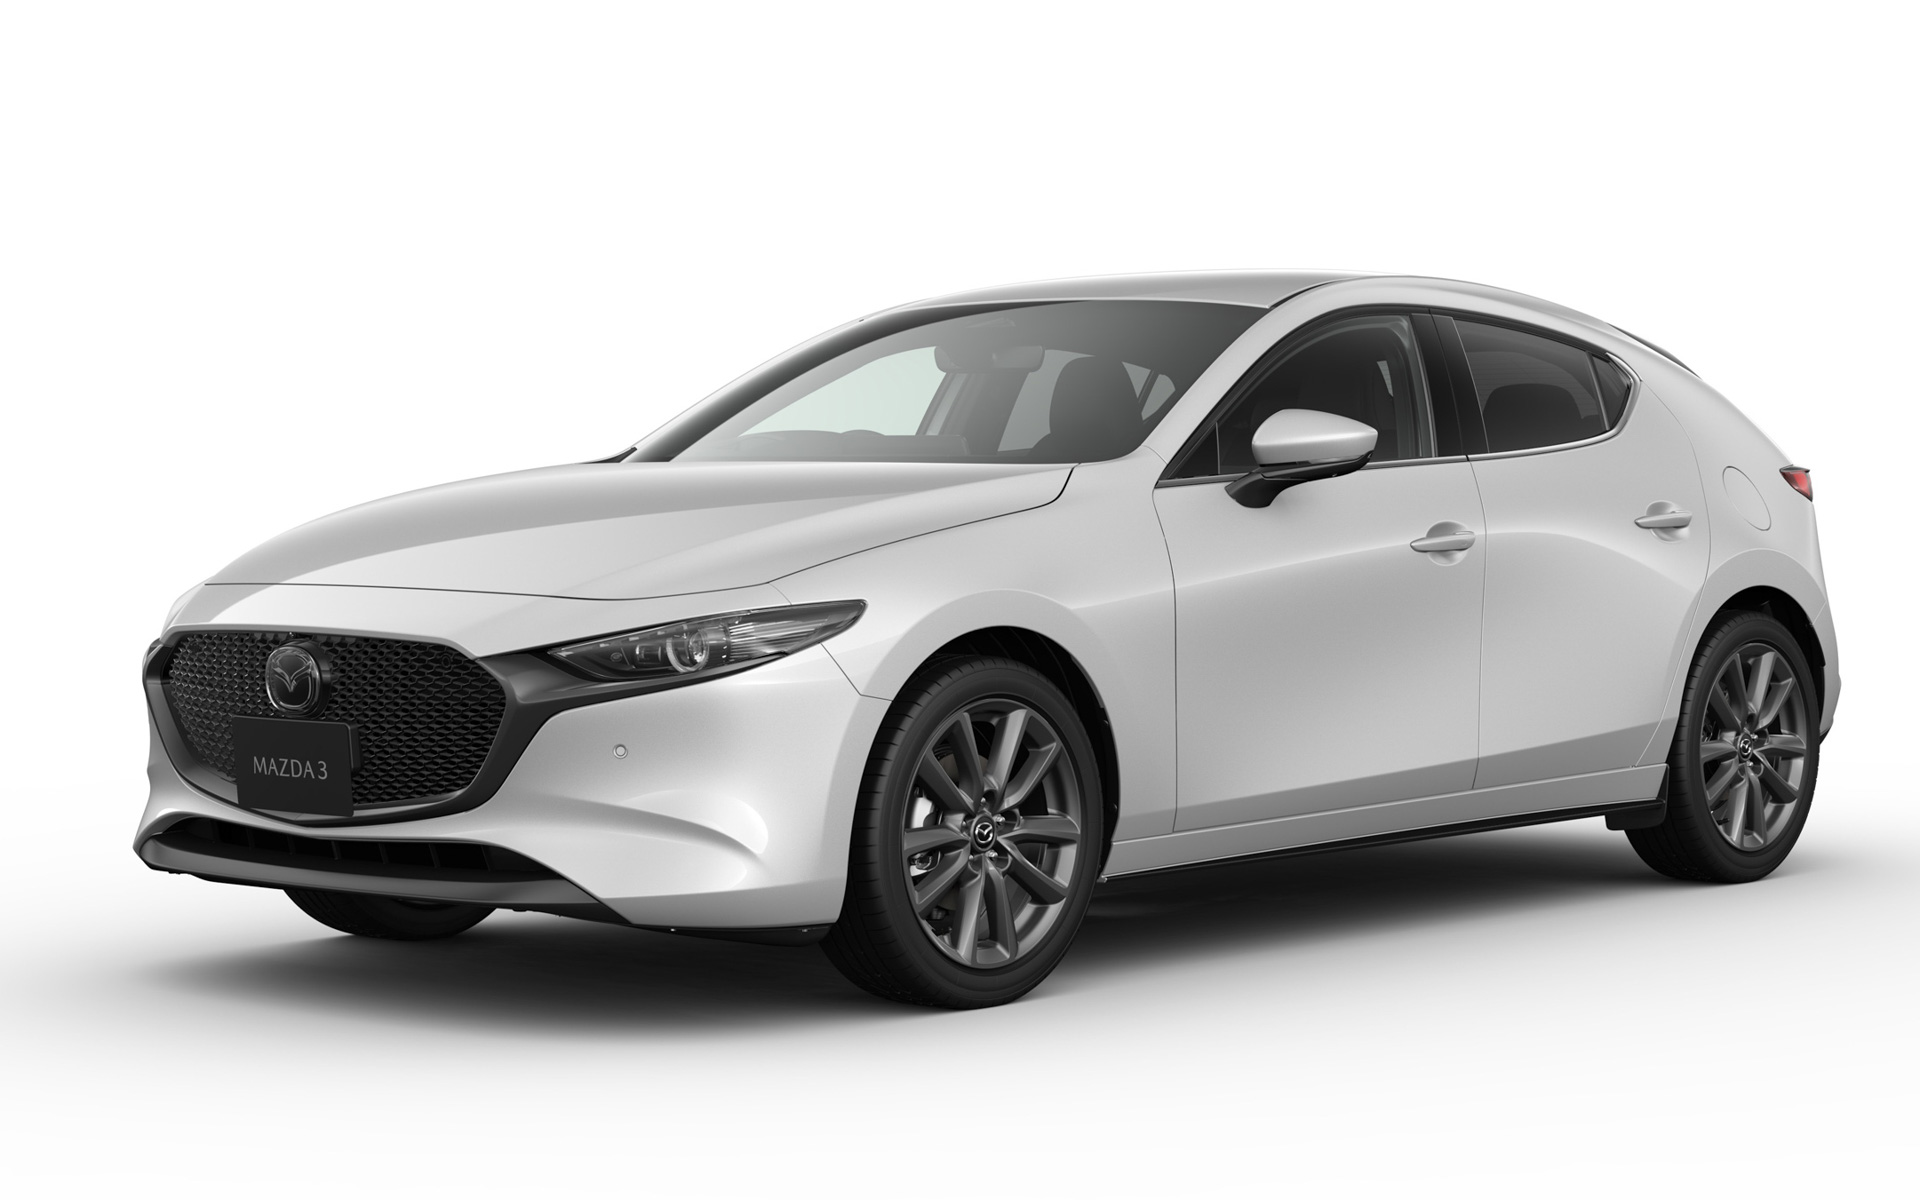 Mazda To Improve Mazda3 Add New Color Ceramic Metallic And Adopt 10 25 Inch Center Display